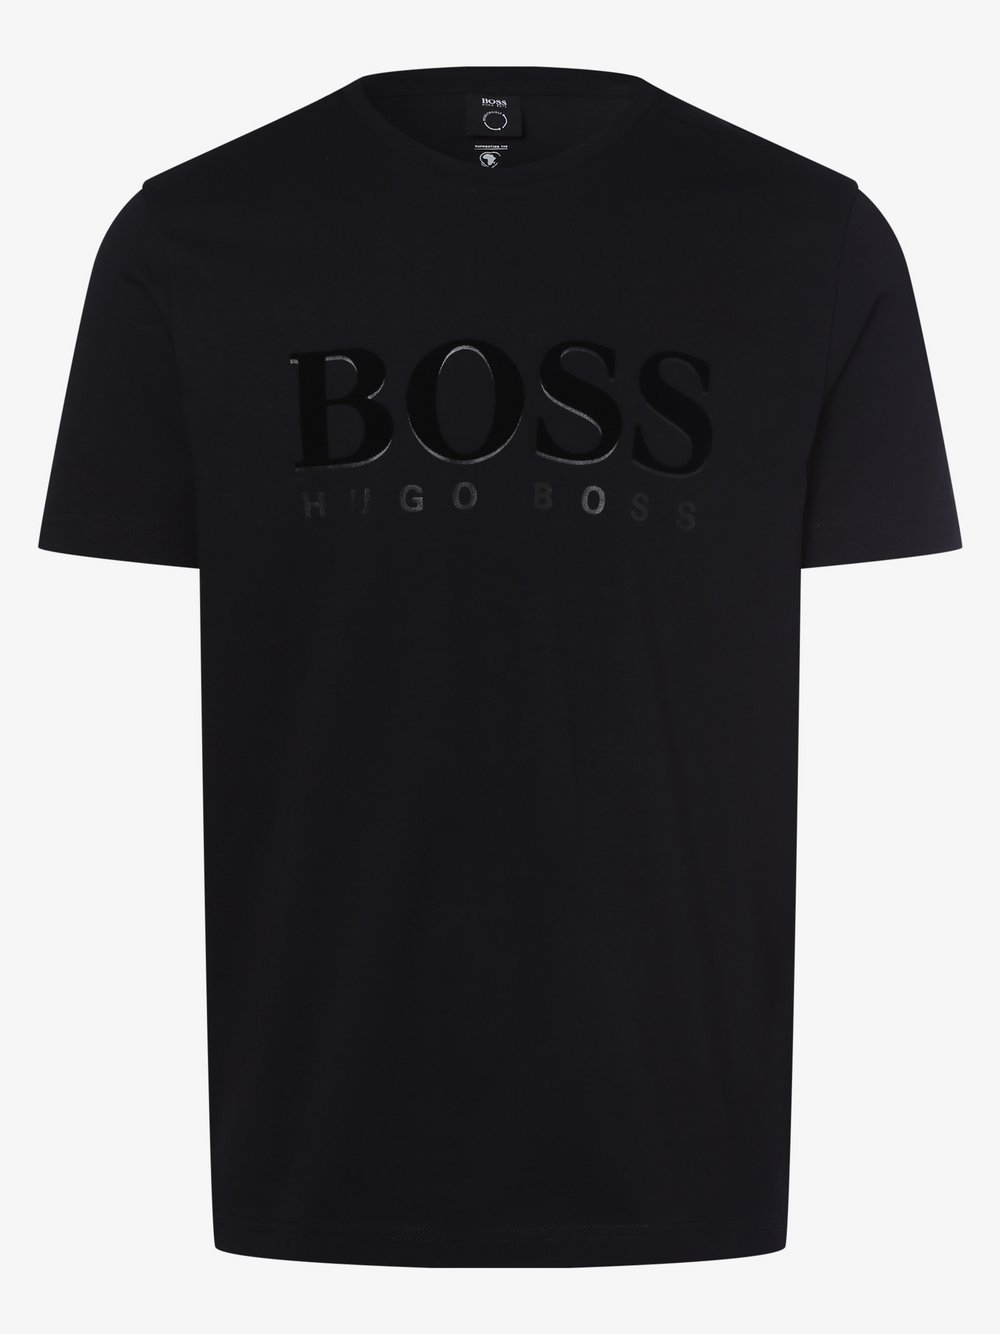 BOSS Green - T-shirt męski – Tee 3, czarny